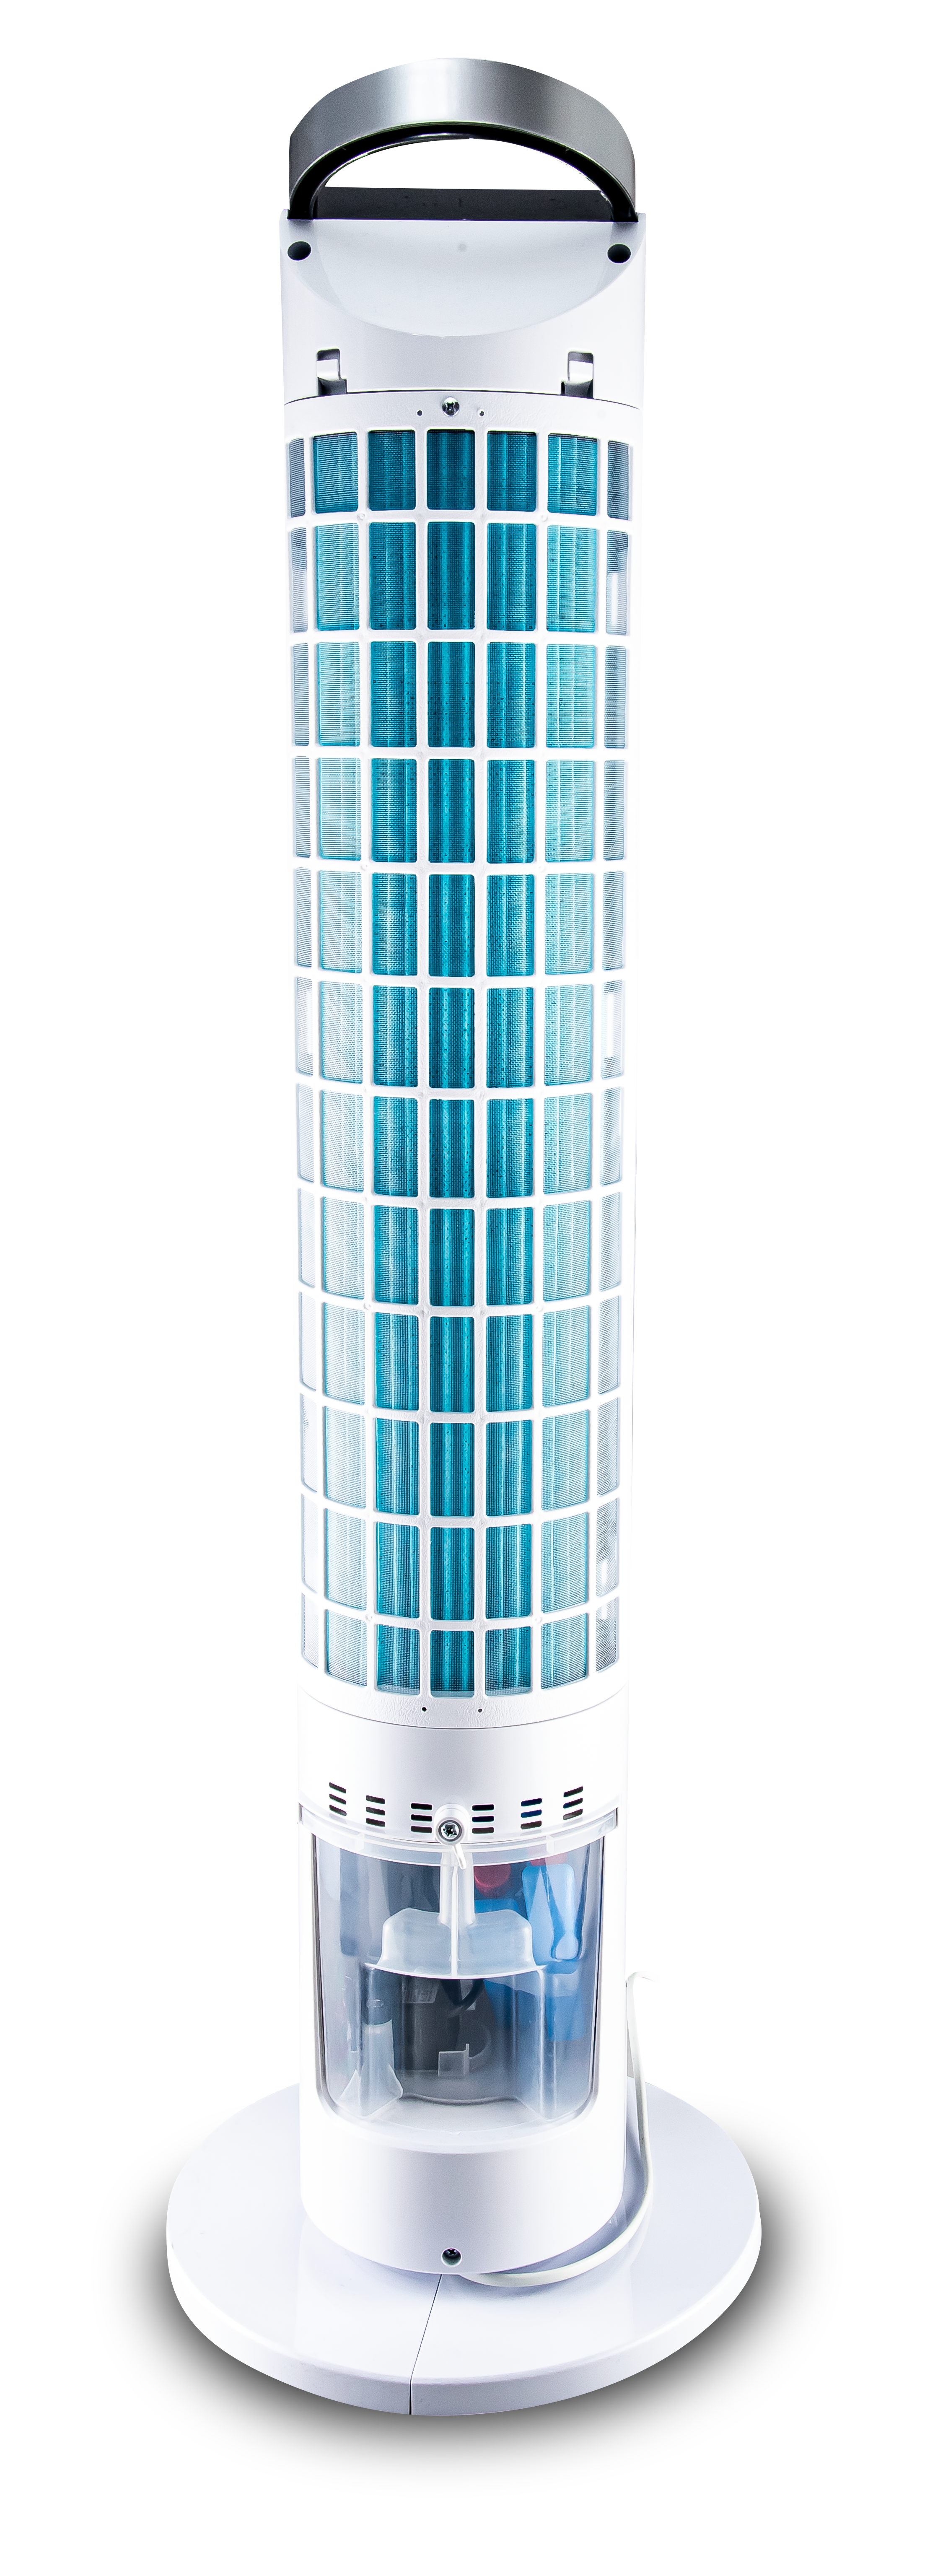 KOENIC KTFC 6020 2IN1 Watt) Weiß Luftkühler (60 Turmventilator